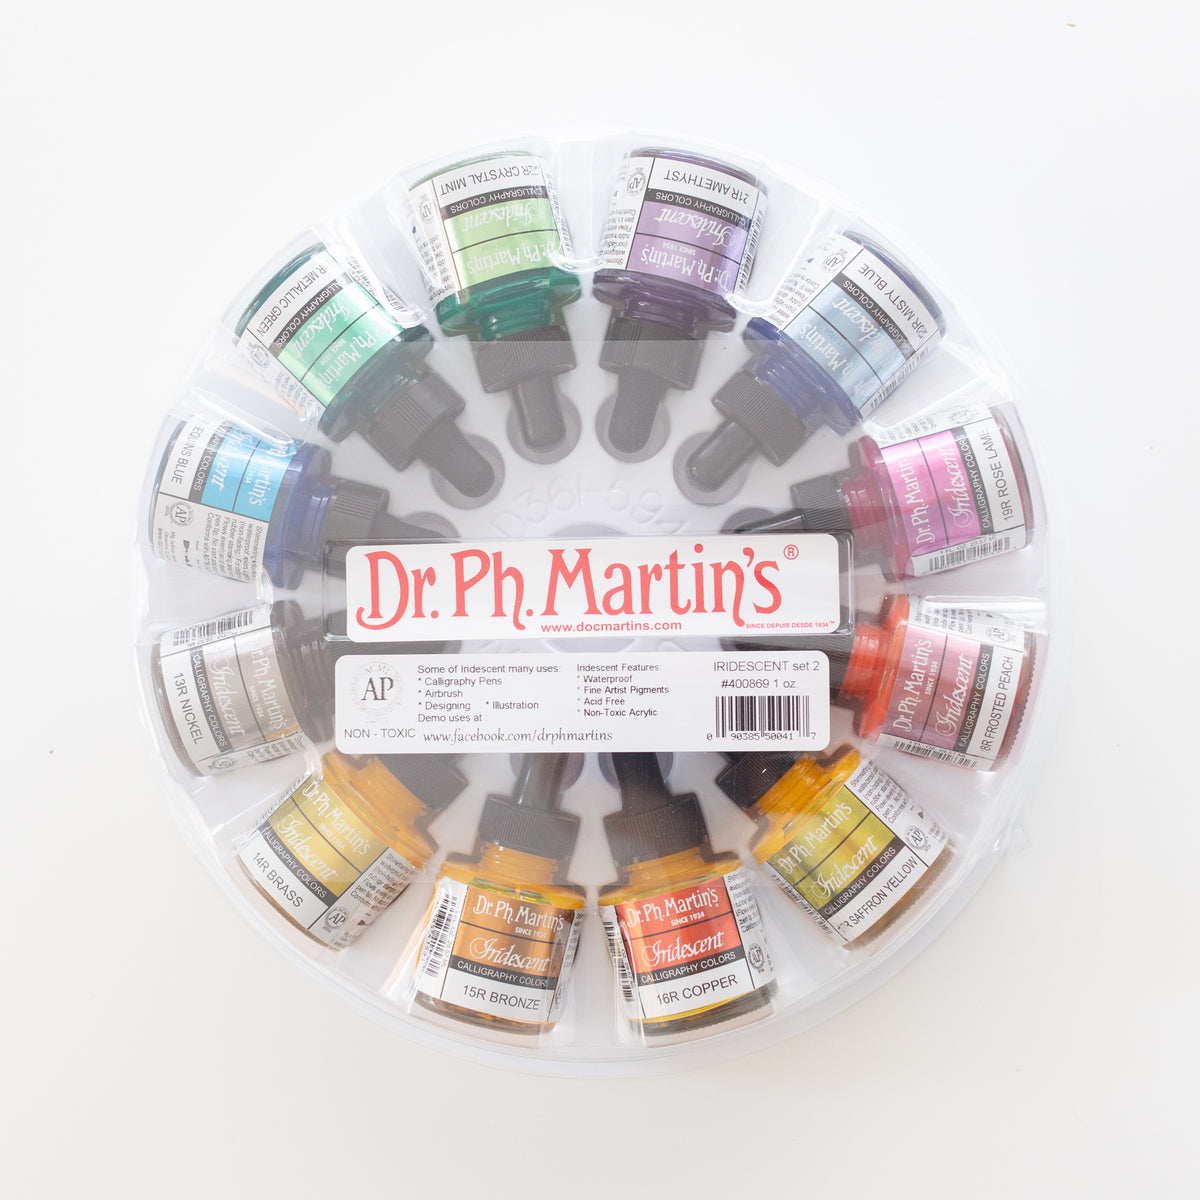 Iridescent ink Dr Ph. Martins set 2